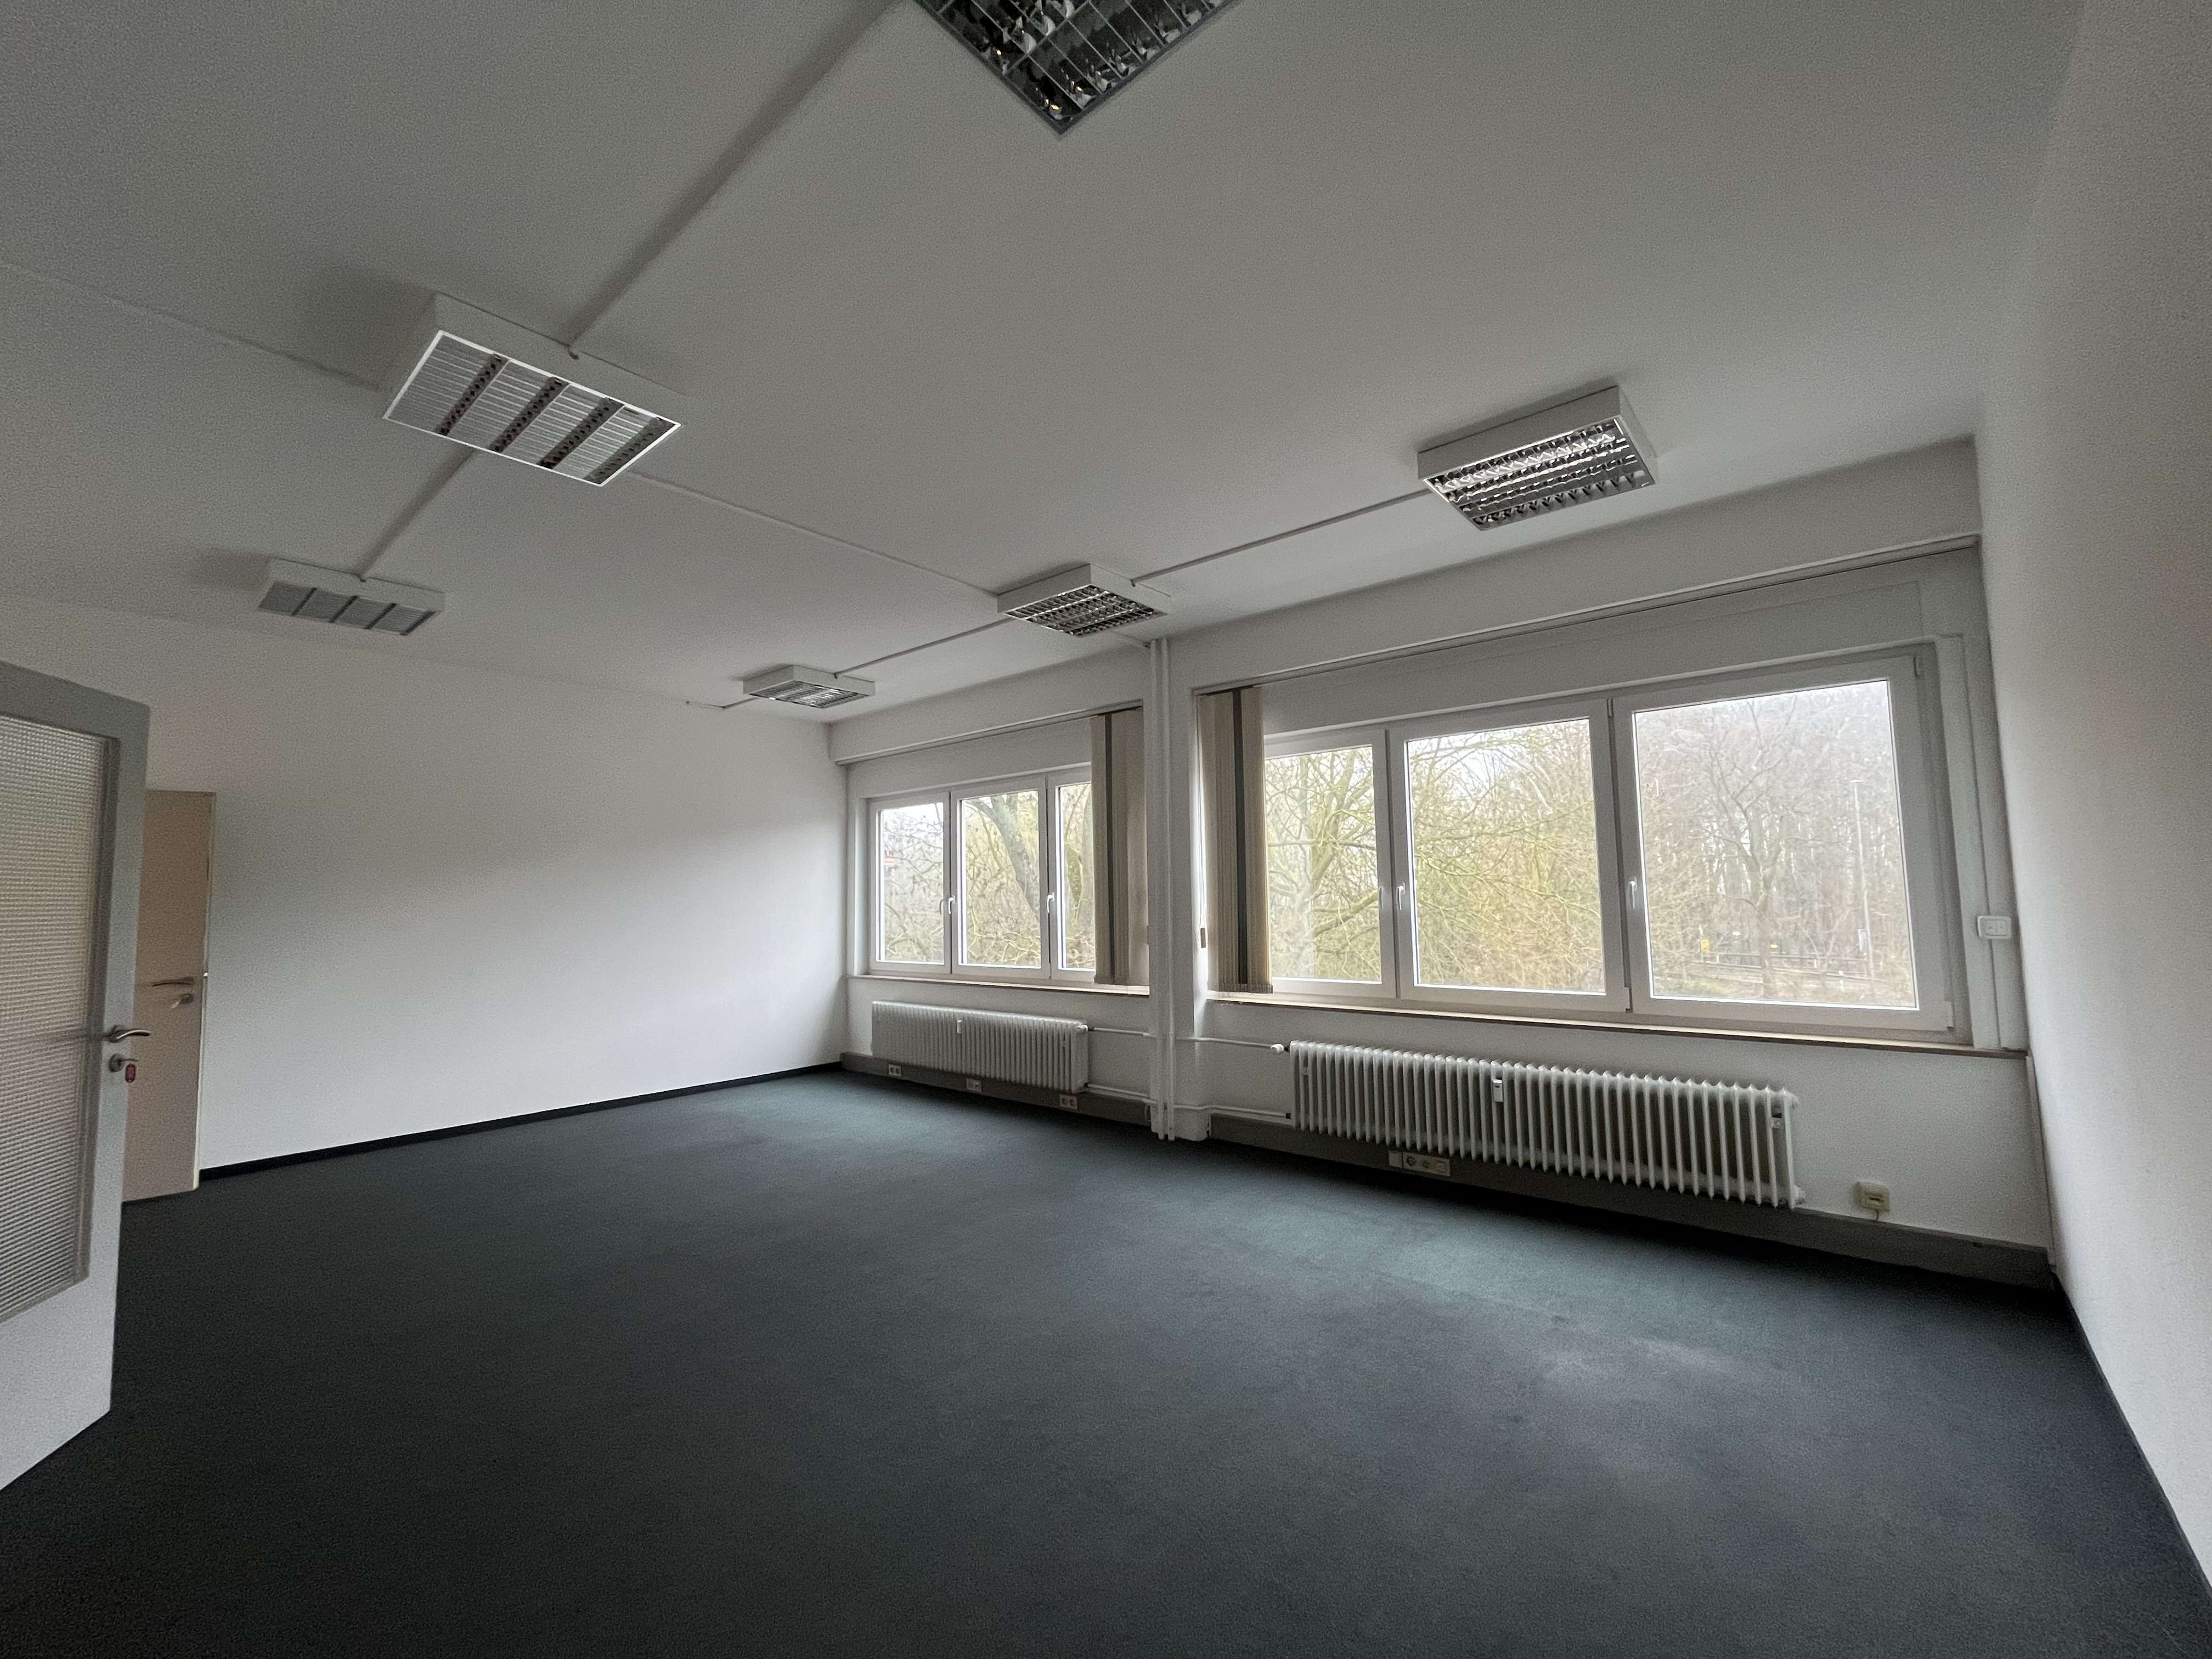 Büro in Münster 390,00 € 39 m² - 390,00 EUR Kaltmiete, ca.  39,00 m² in Münster (PLZ: 48145)